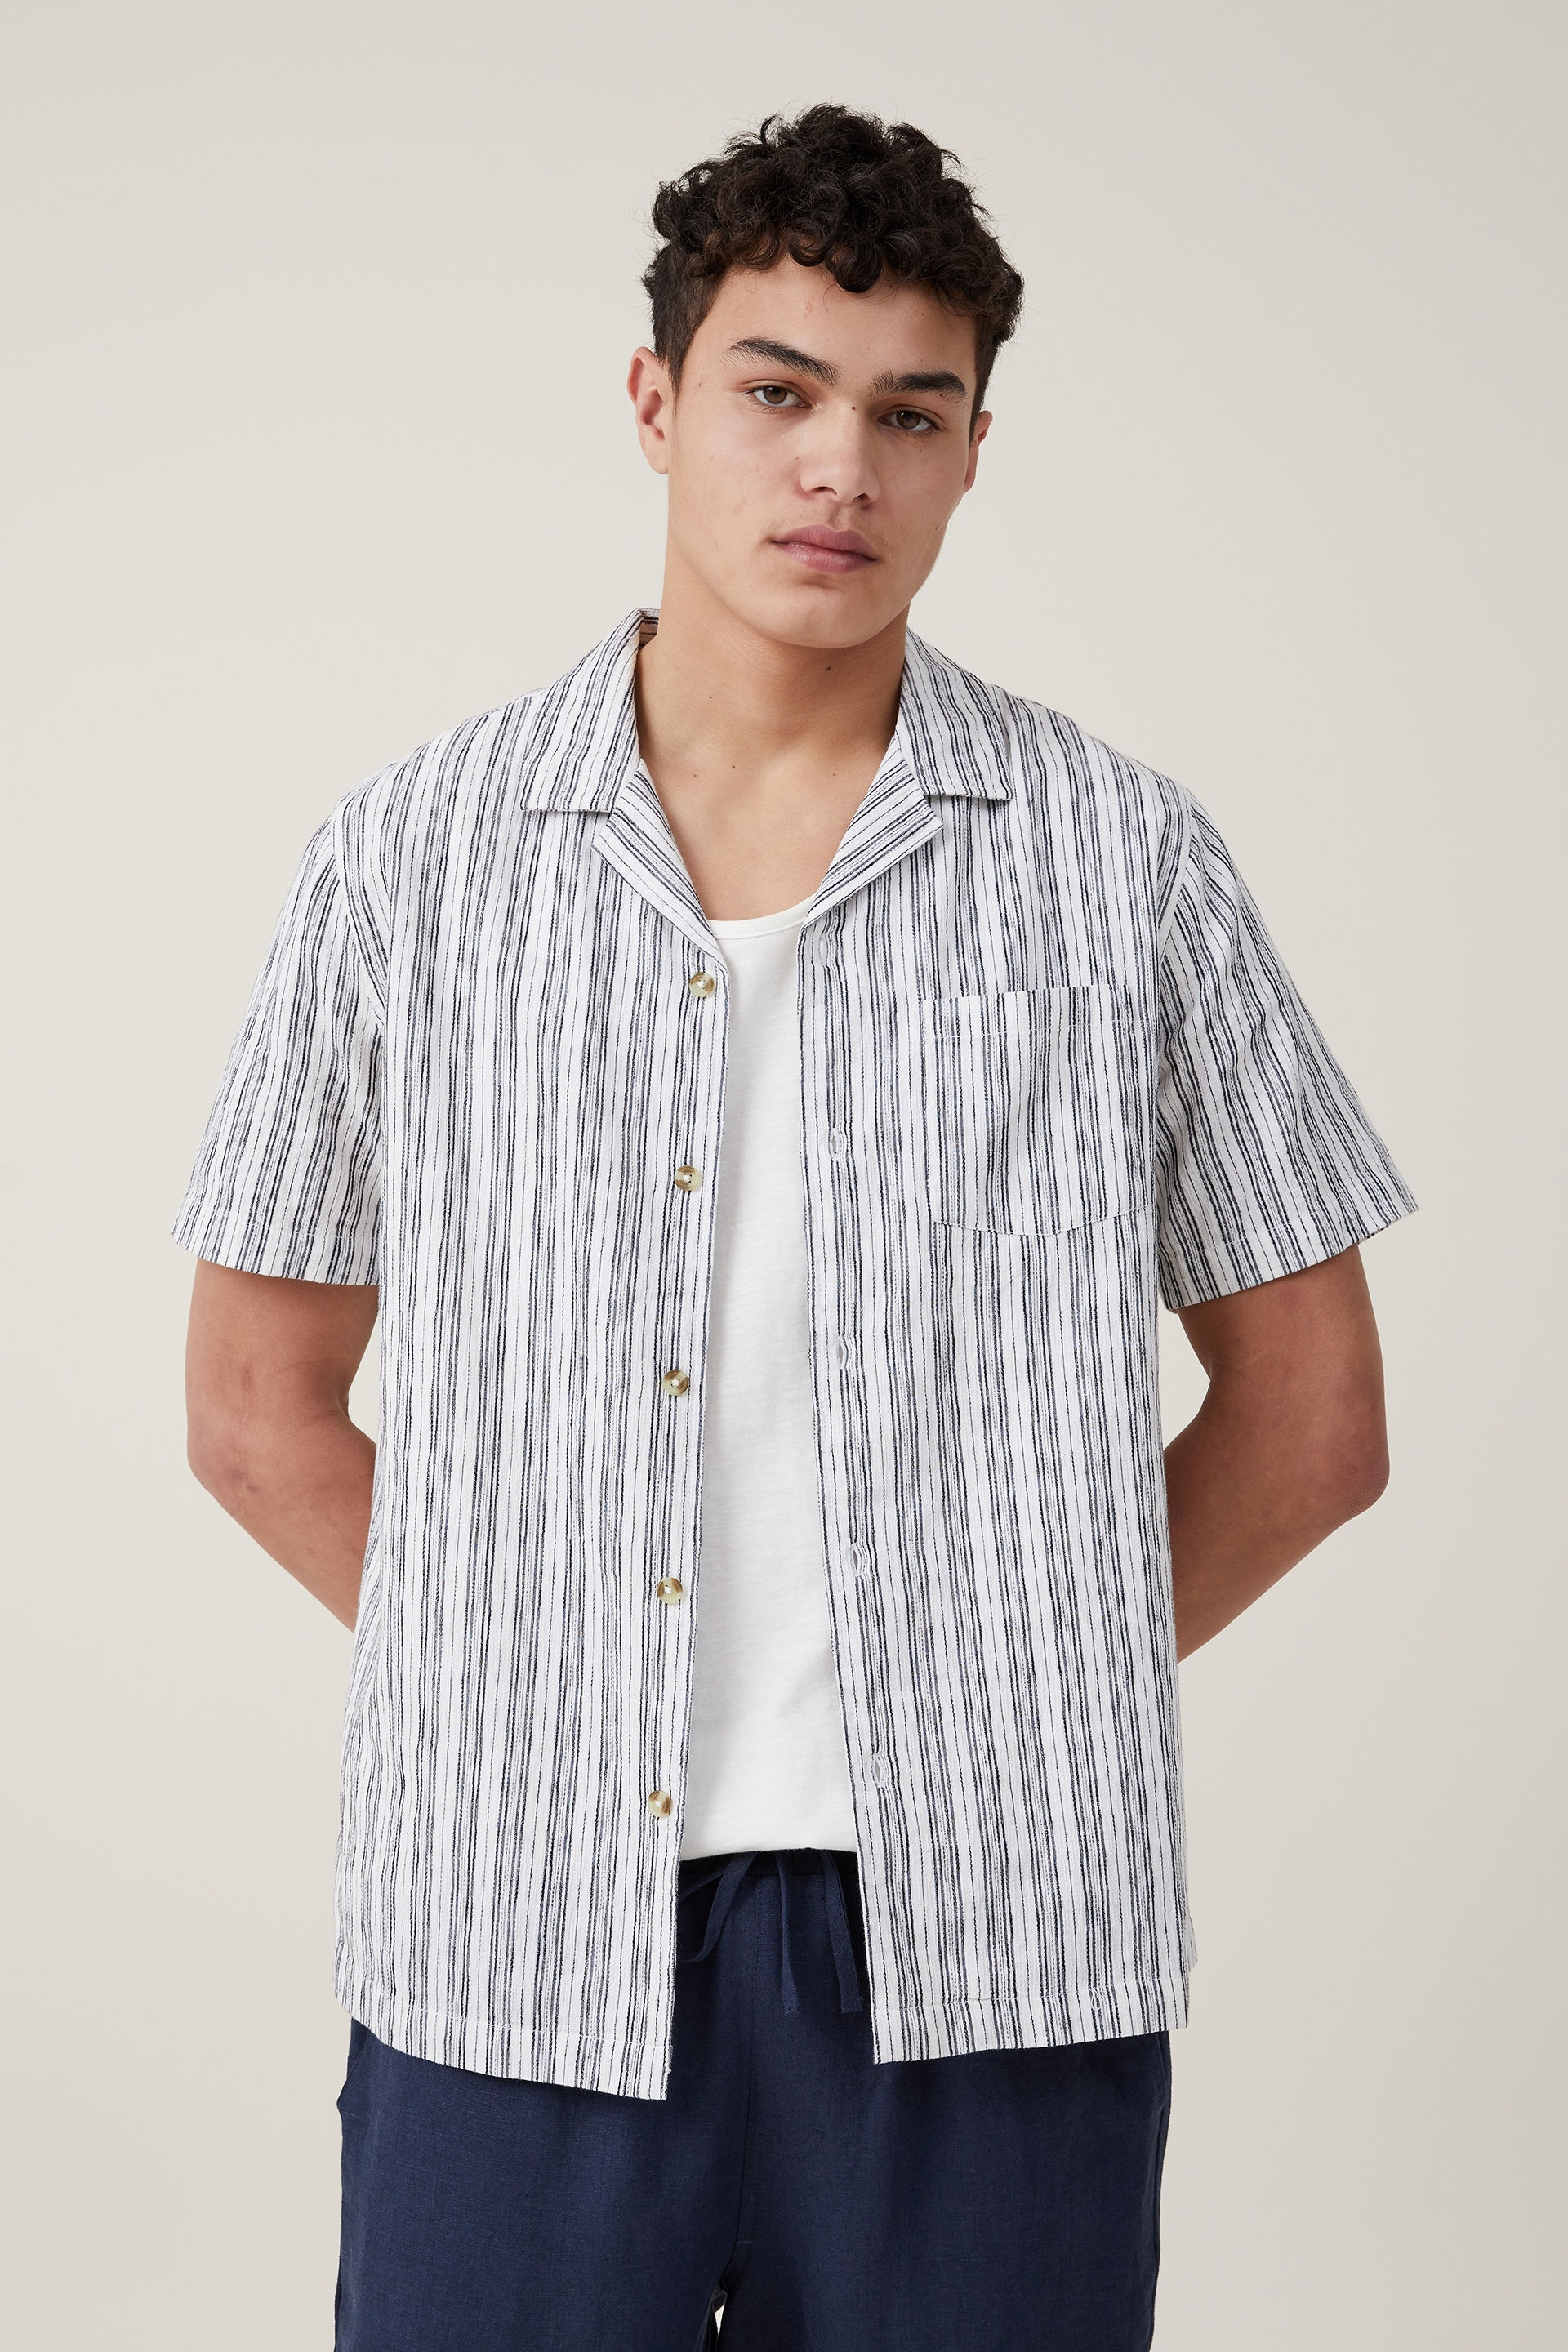 Cotton On Men - Riviera Short Sleeve Shirt - White black stripe